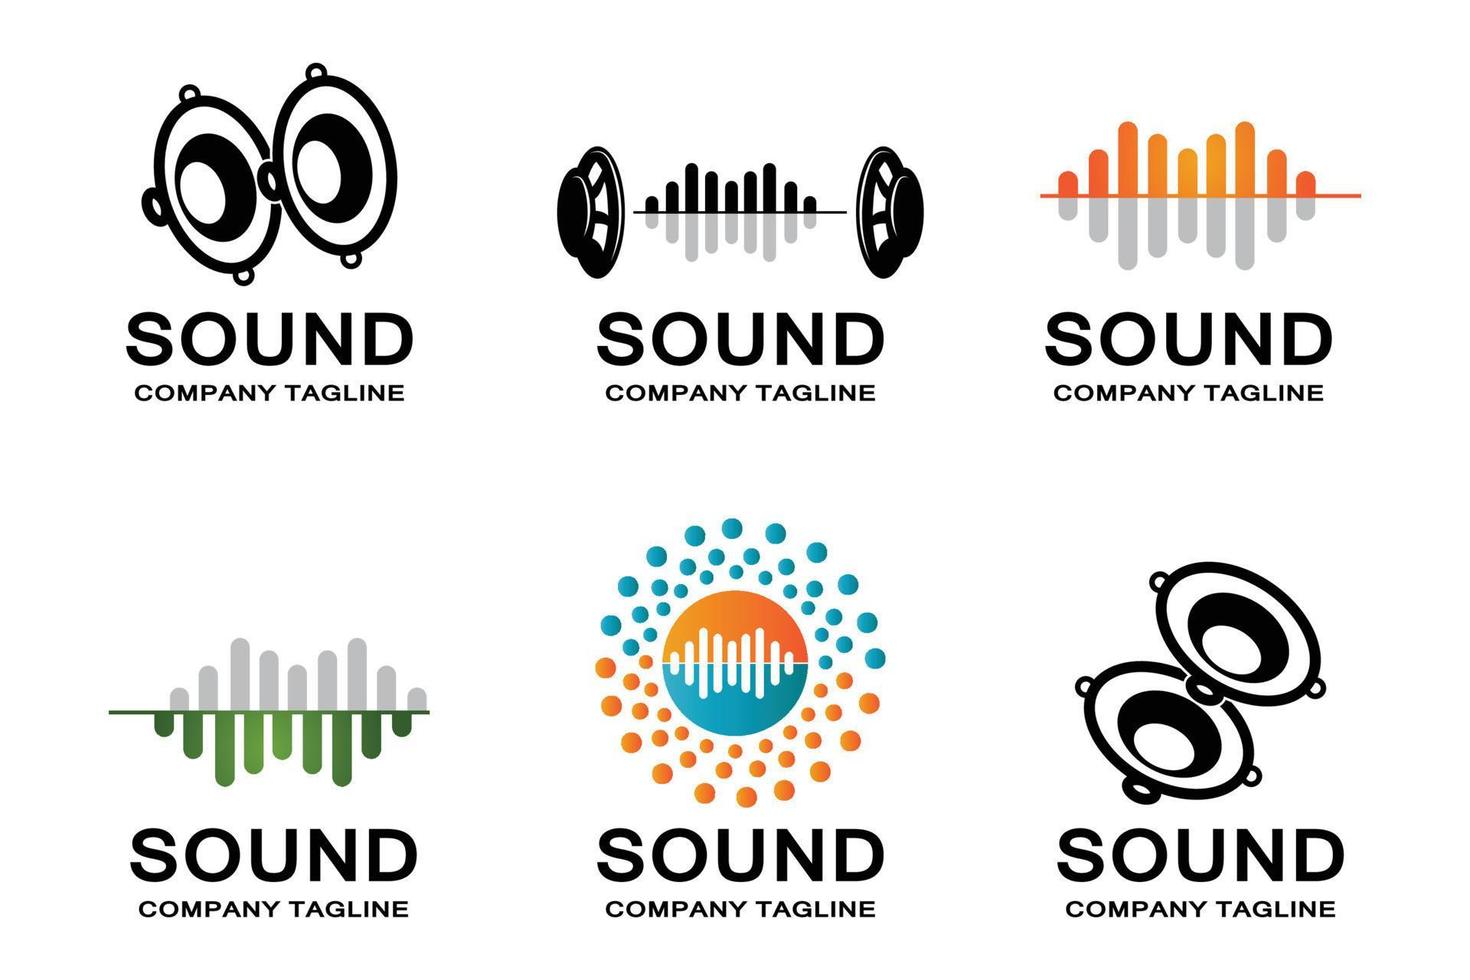 Simple music sound logo vector icon